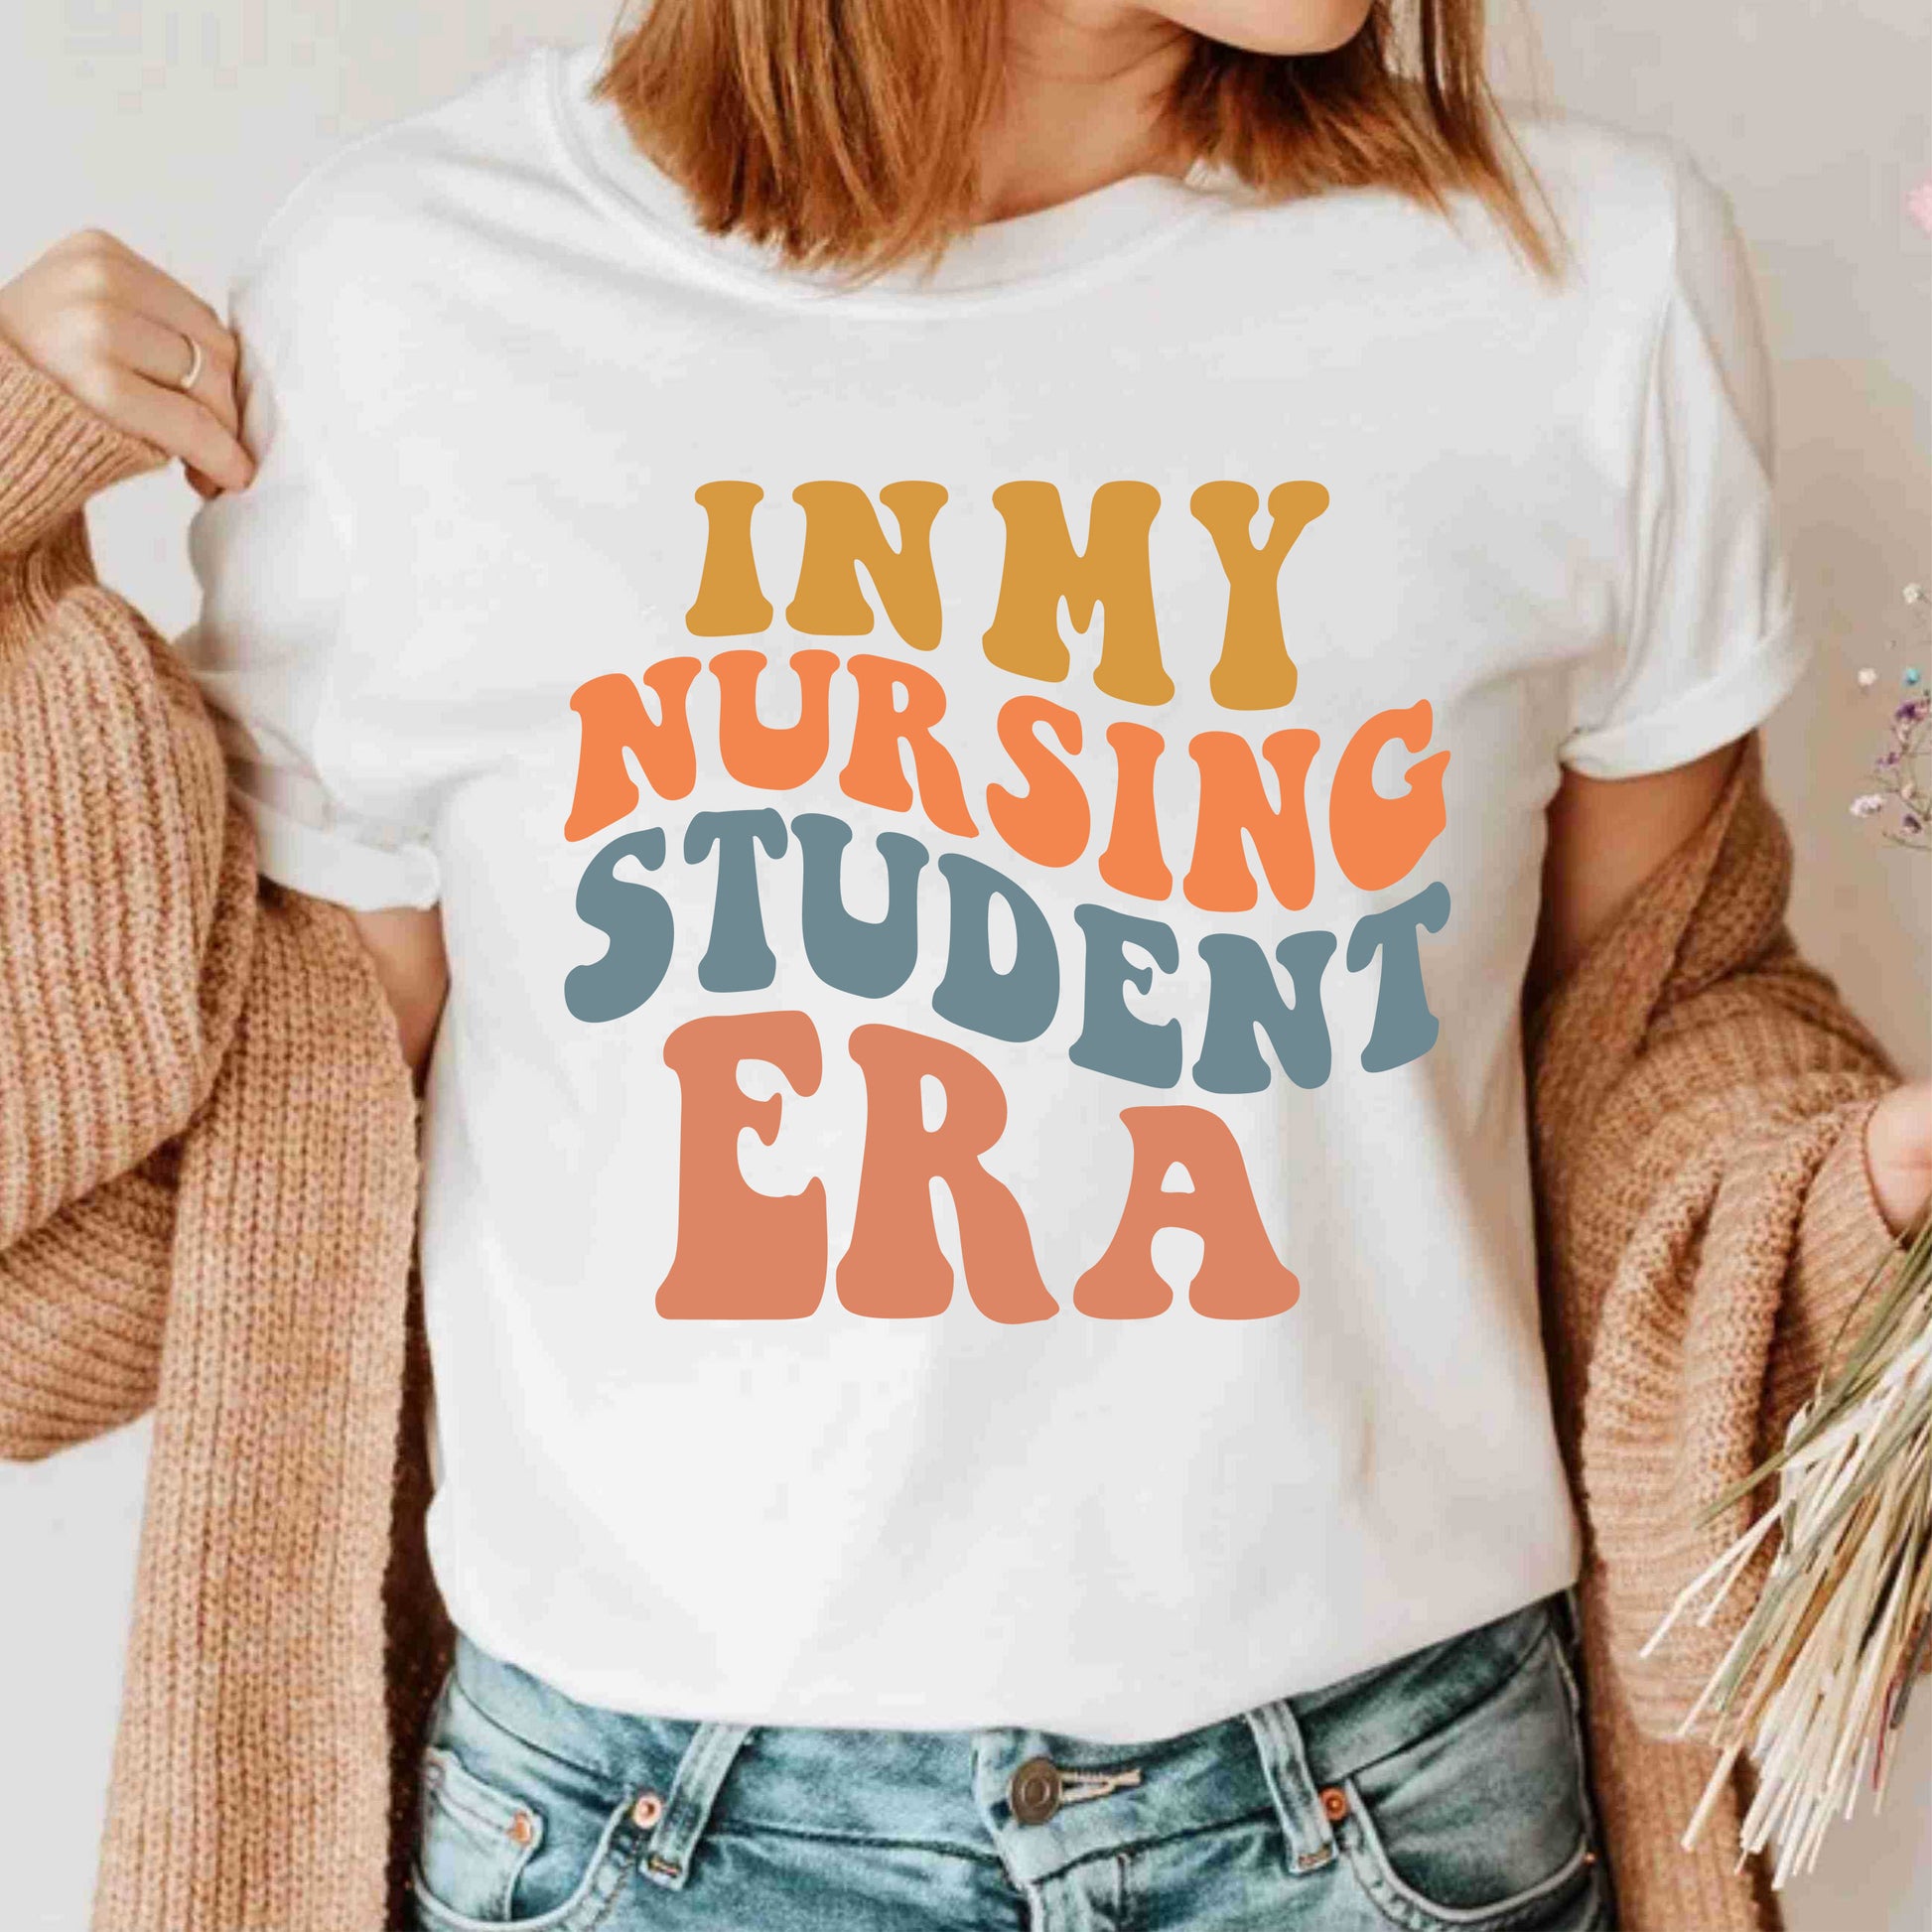 in-my-nursing-student-era-cool-nurses-trendy-school-student-t-shirts